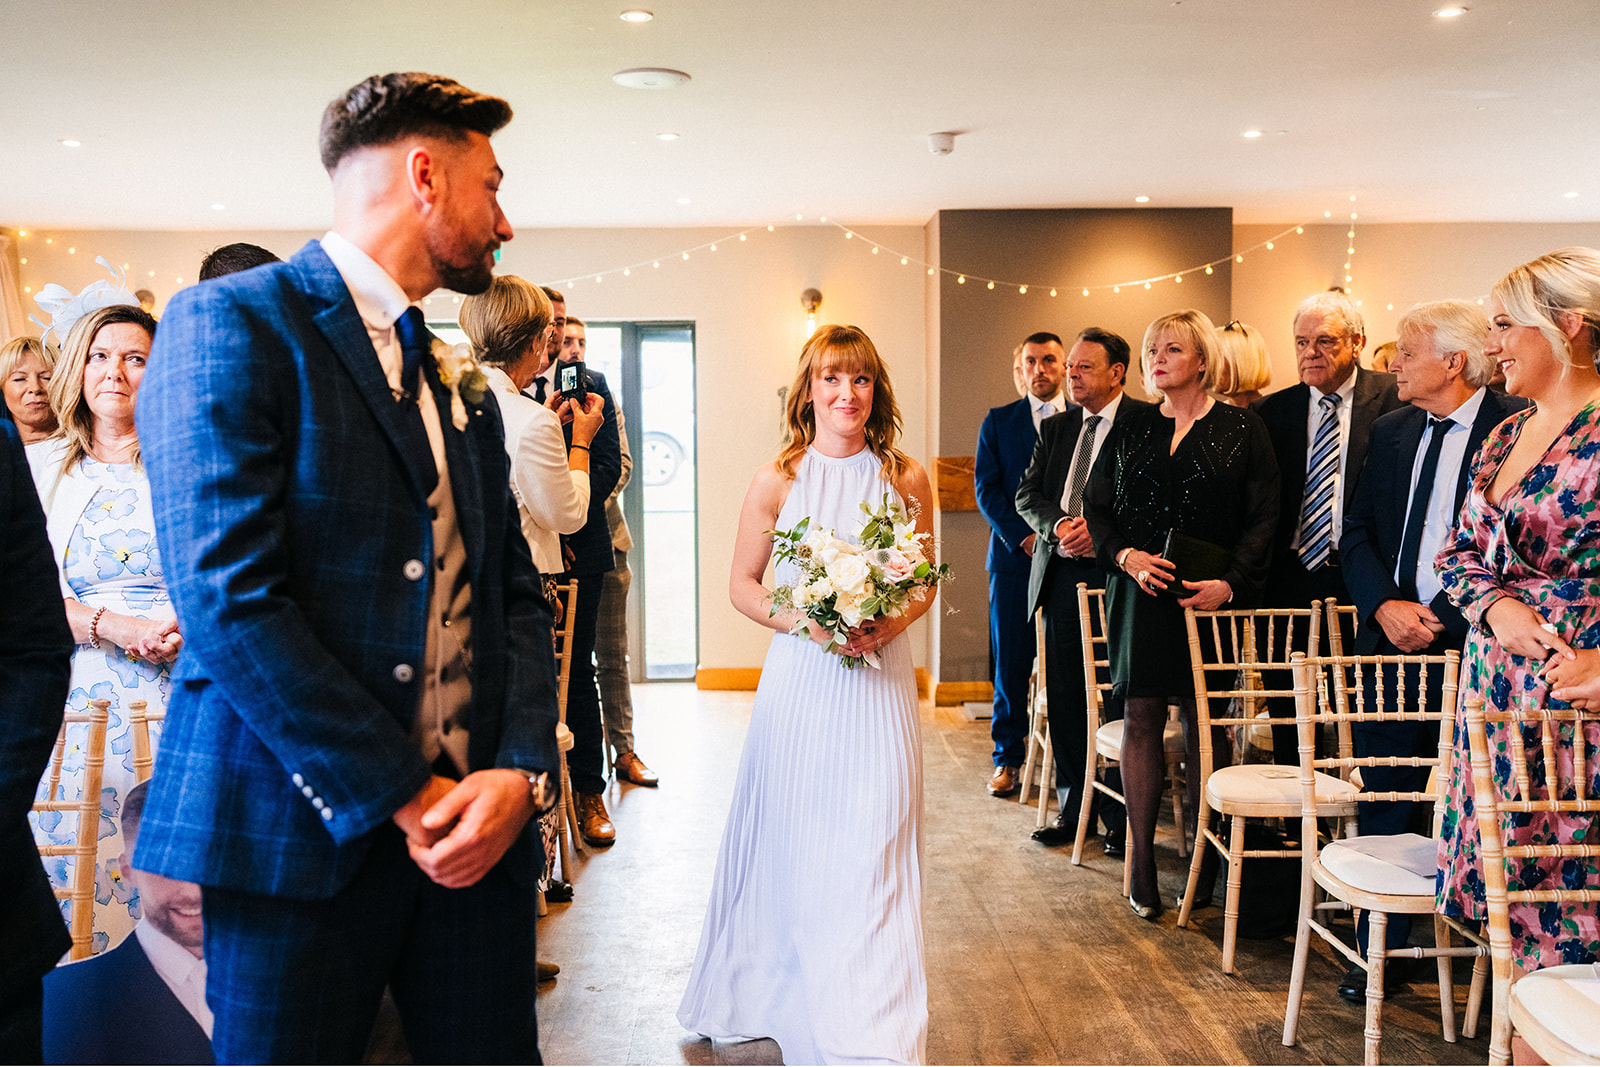 The Chequers Inn Wedding Photography - bridesmaid walking down the wedding aisle